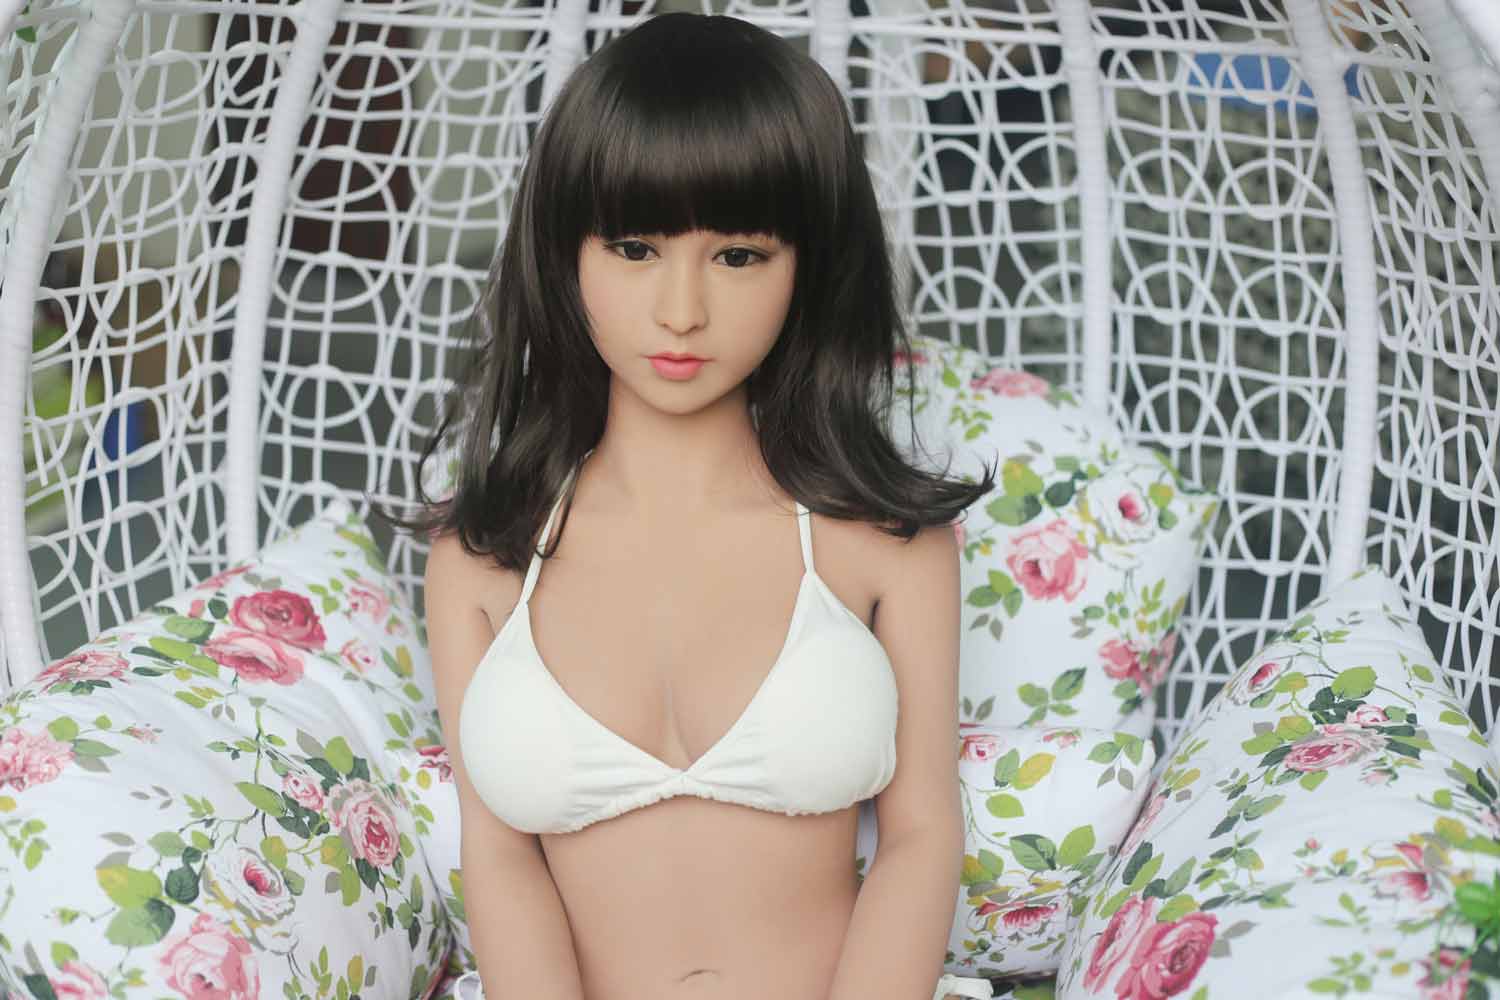 Sex doll in white bra